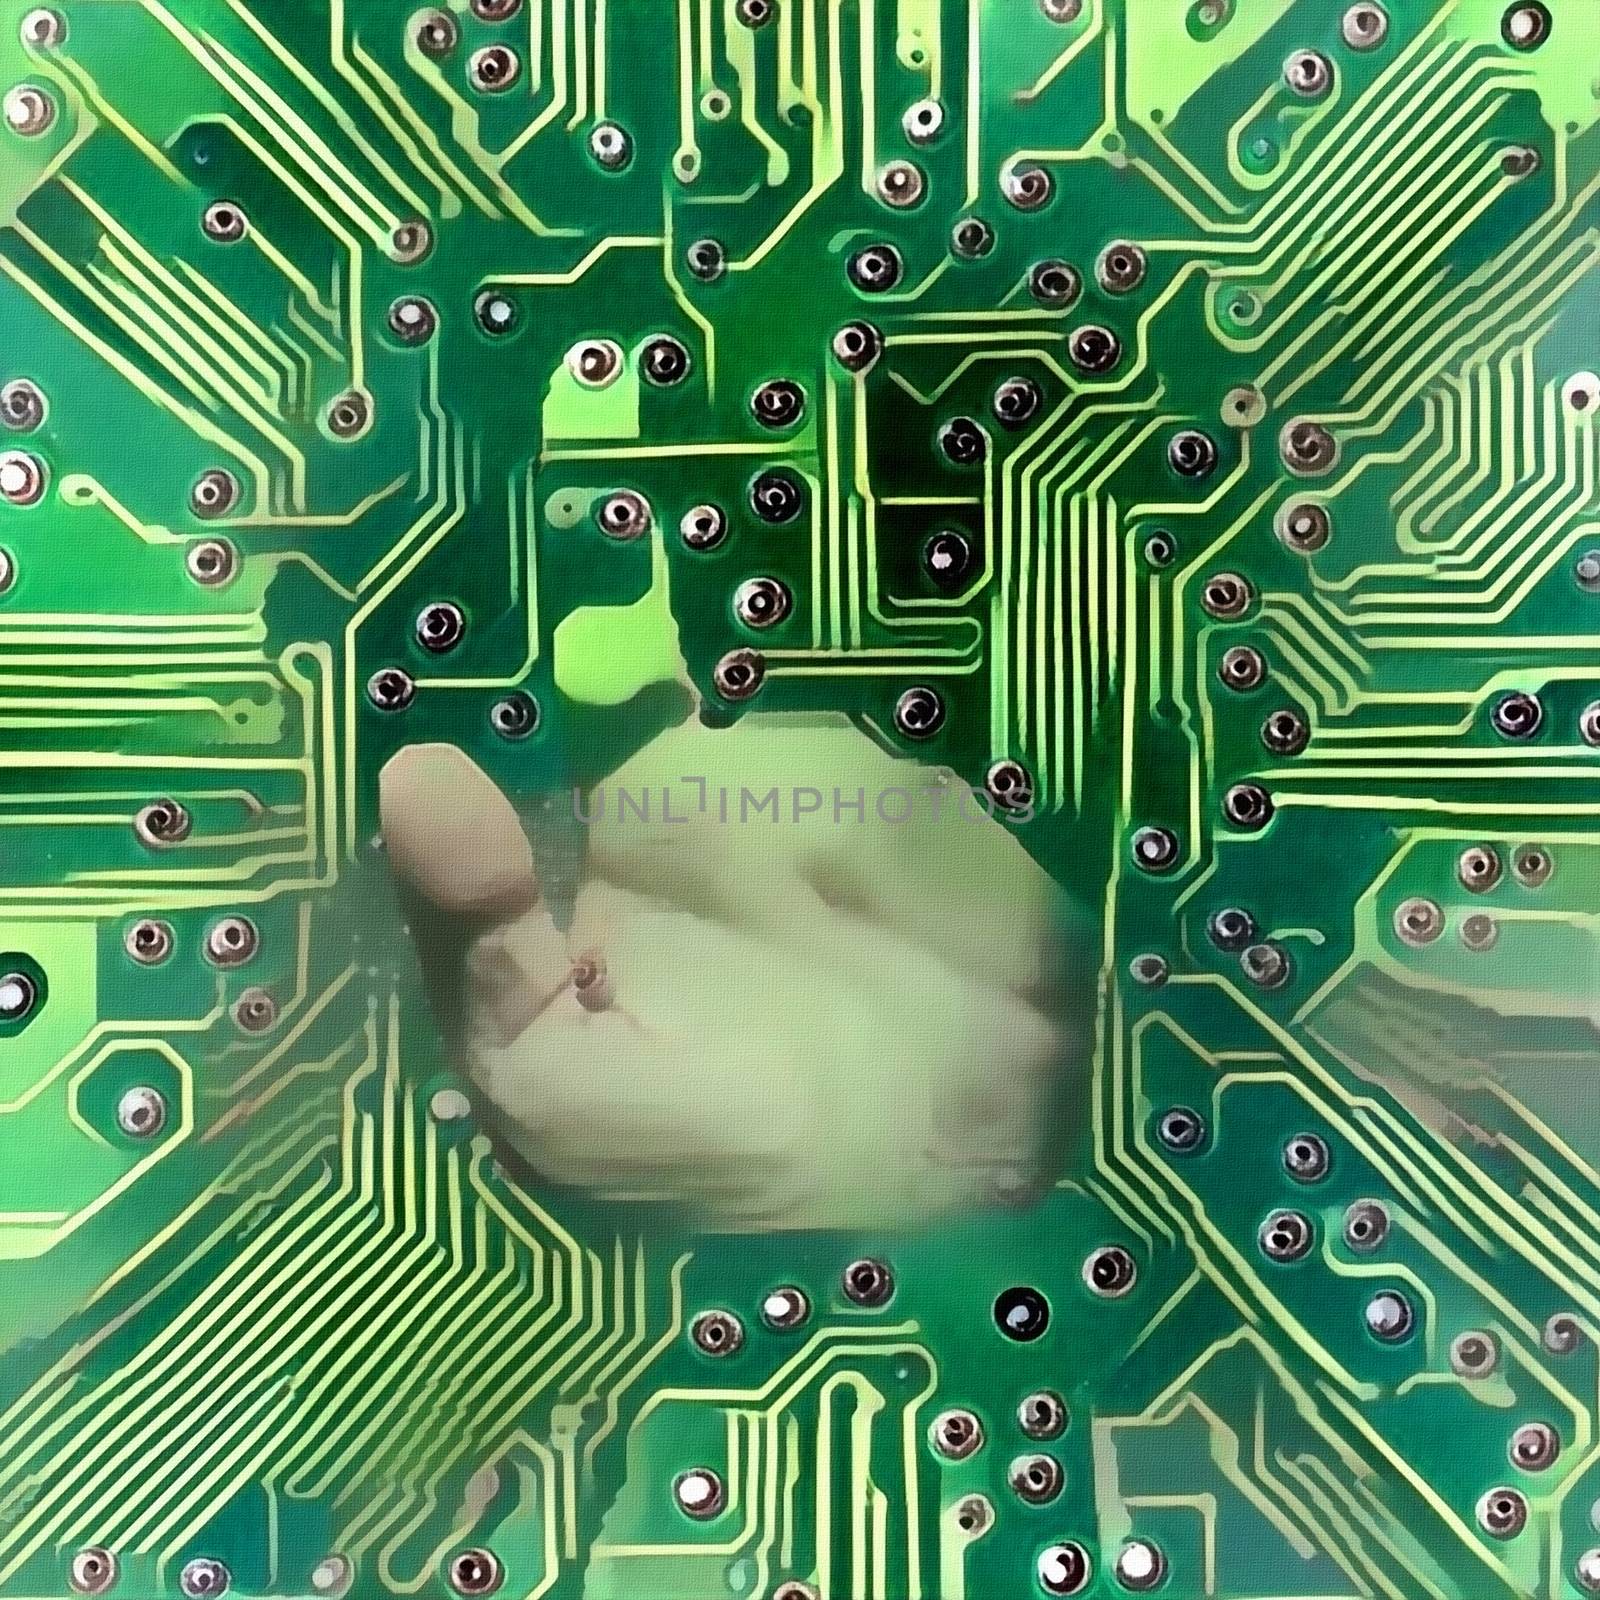 Digital hand. Modern art. Human palm on circuit board